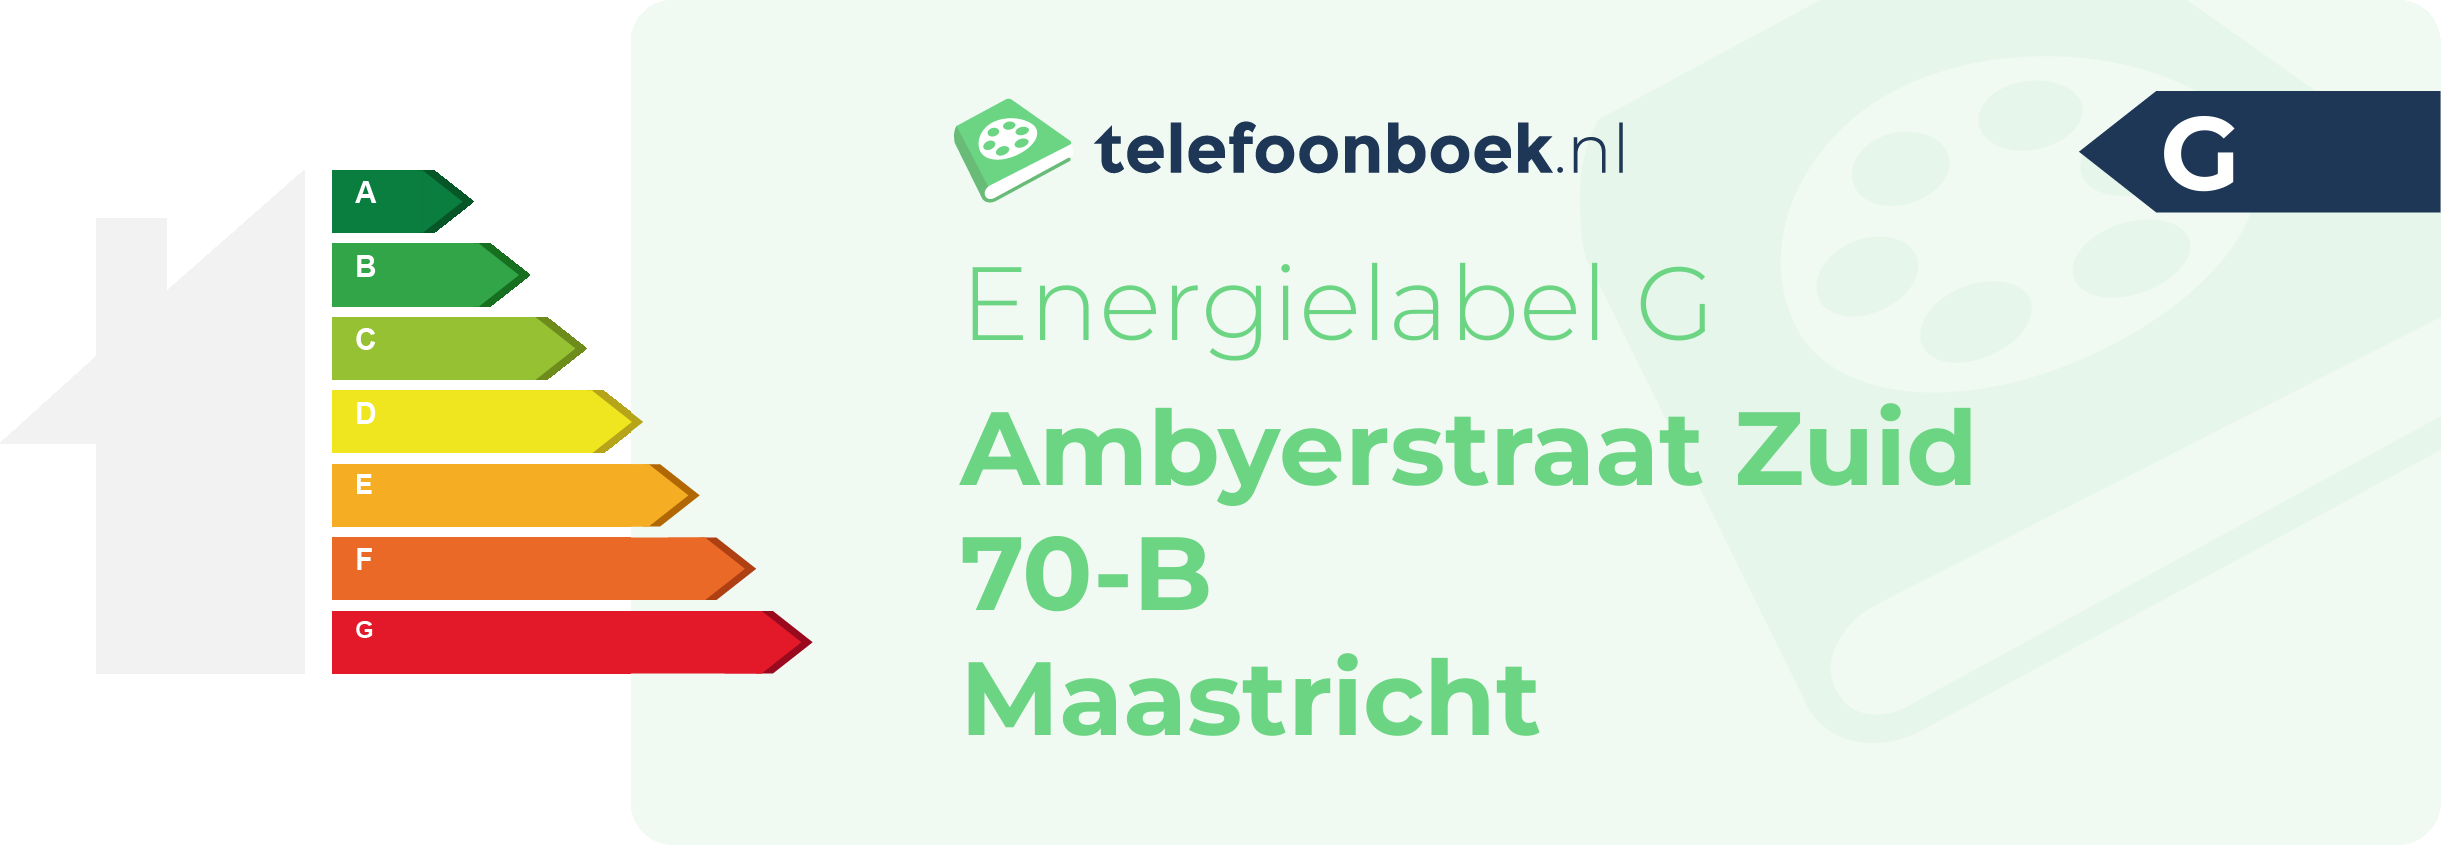 Energielabel Ambyerstraat Zuid 70-B Maastricht